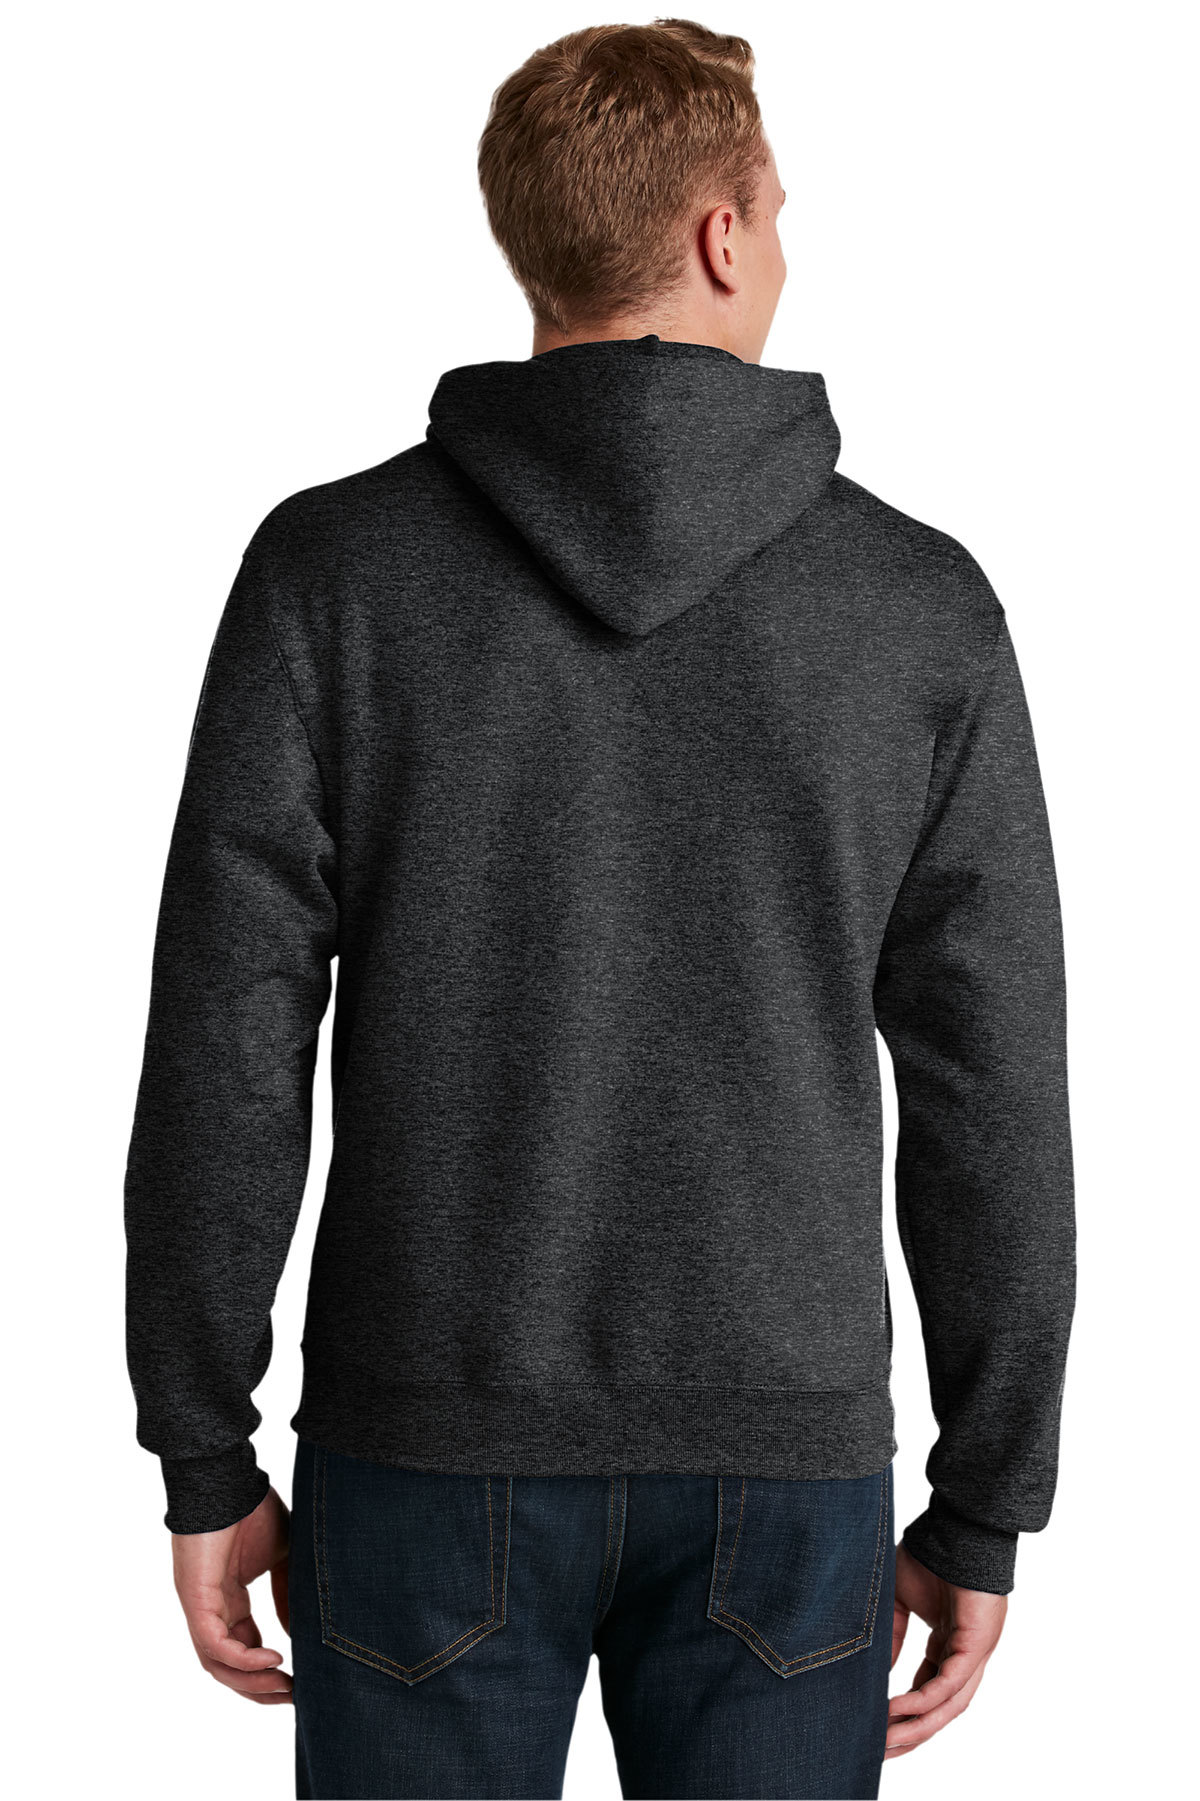 Jerzees Super Sweats NuBlend - Pullover Hooded Sweatshirt | Product ...